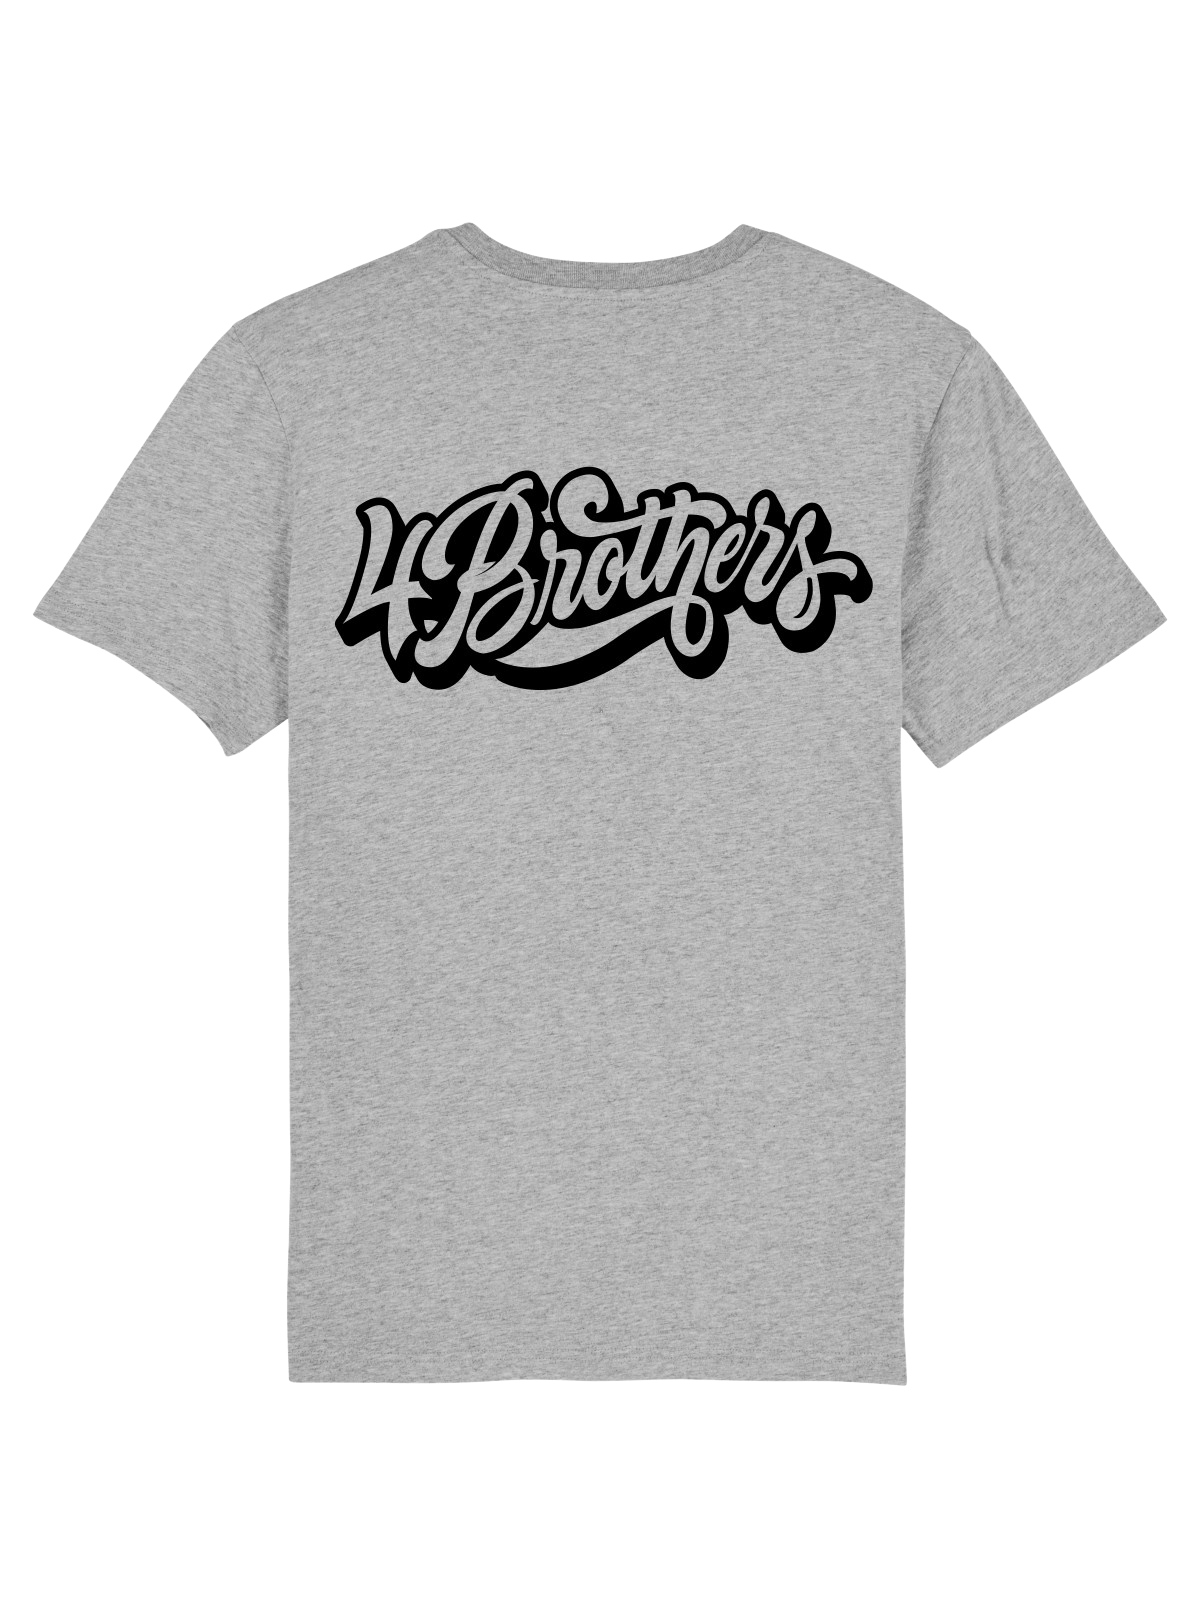 4Brothers T-Shirt comic font  T-Shirt Road Grey 5XL